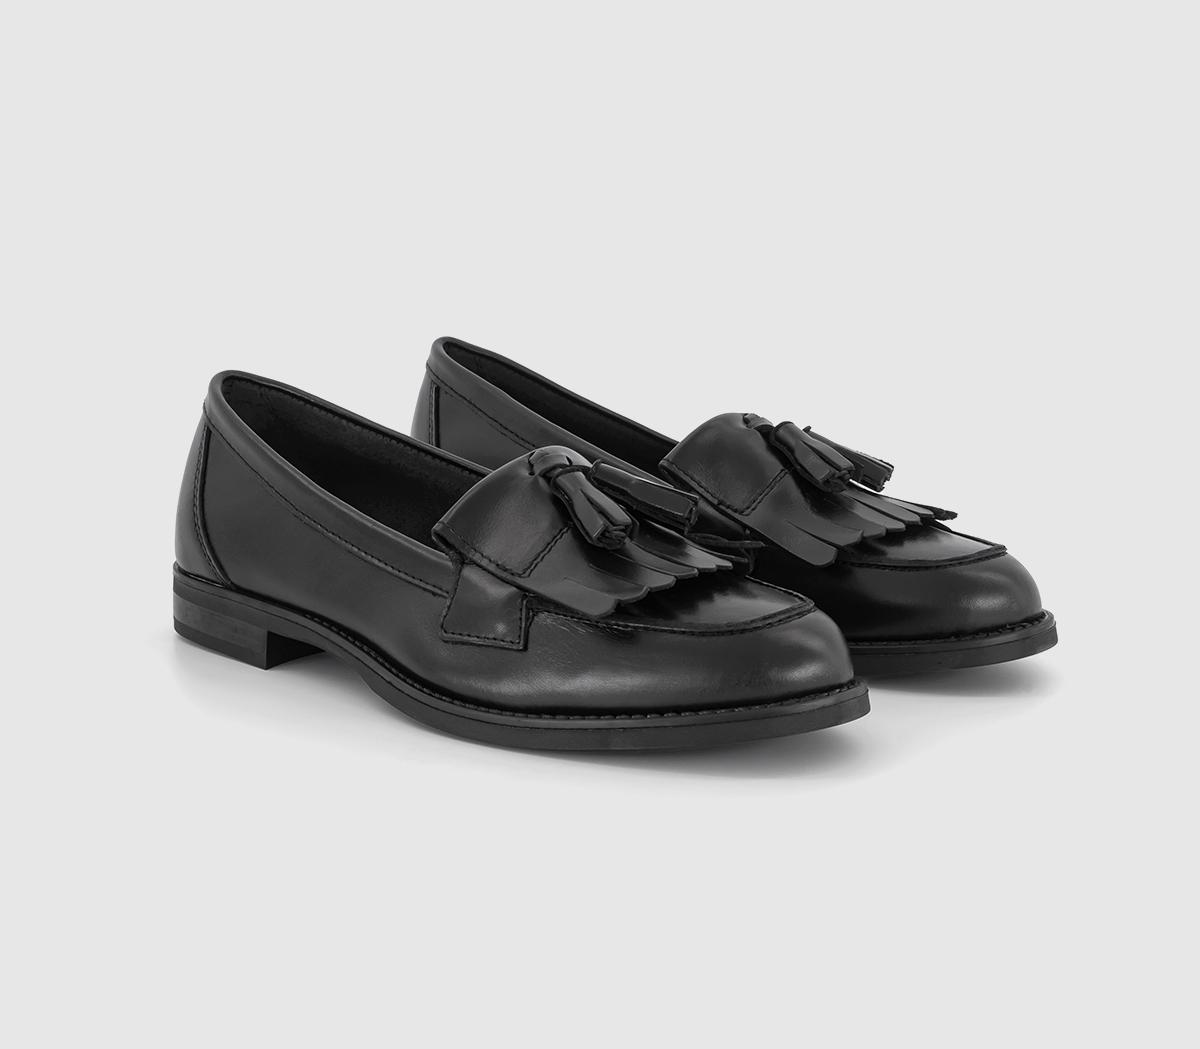 OFFICE Womens Fitz Tassle Fringe Loafers Black Leather, 5